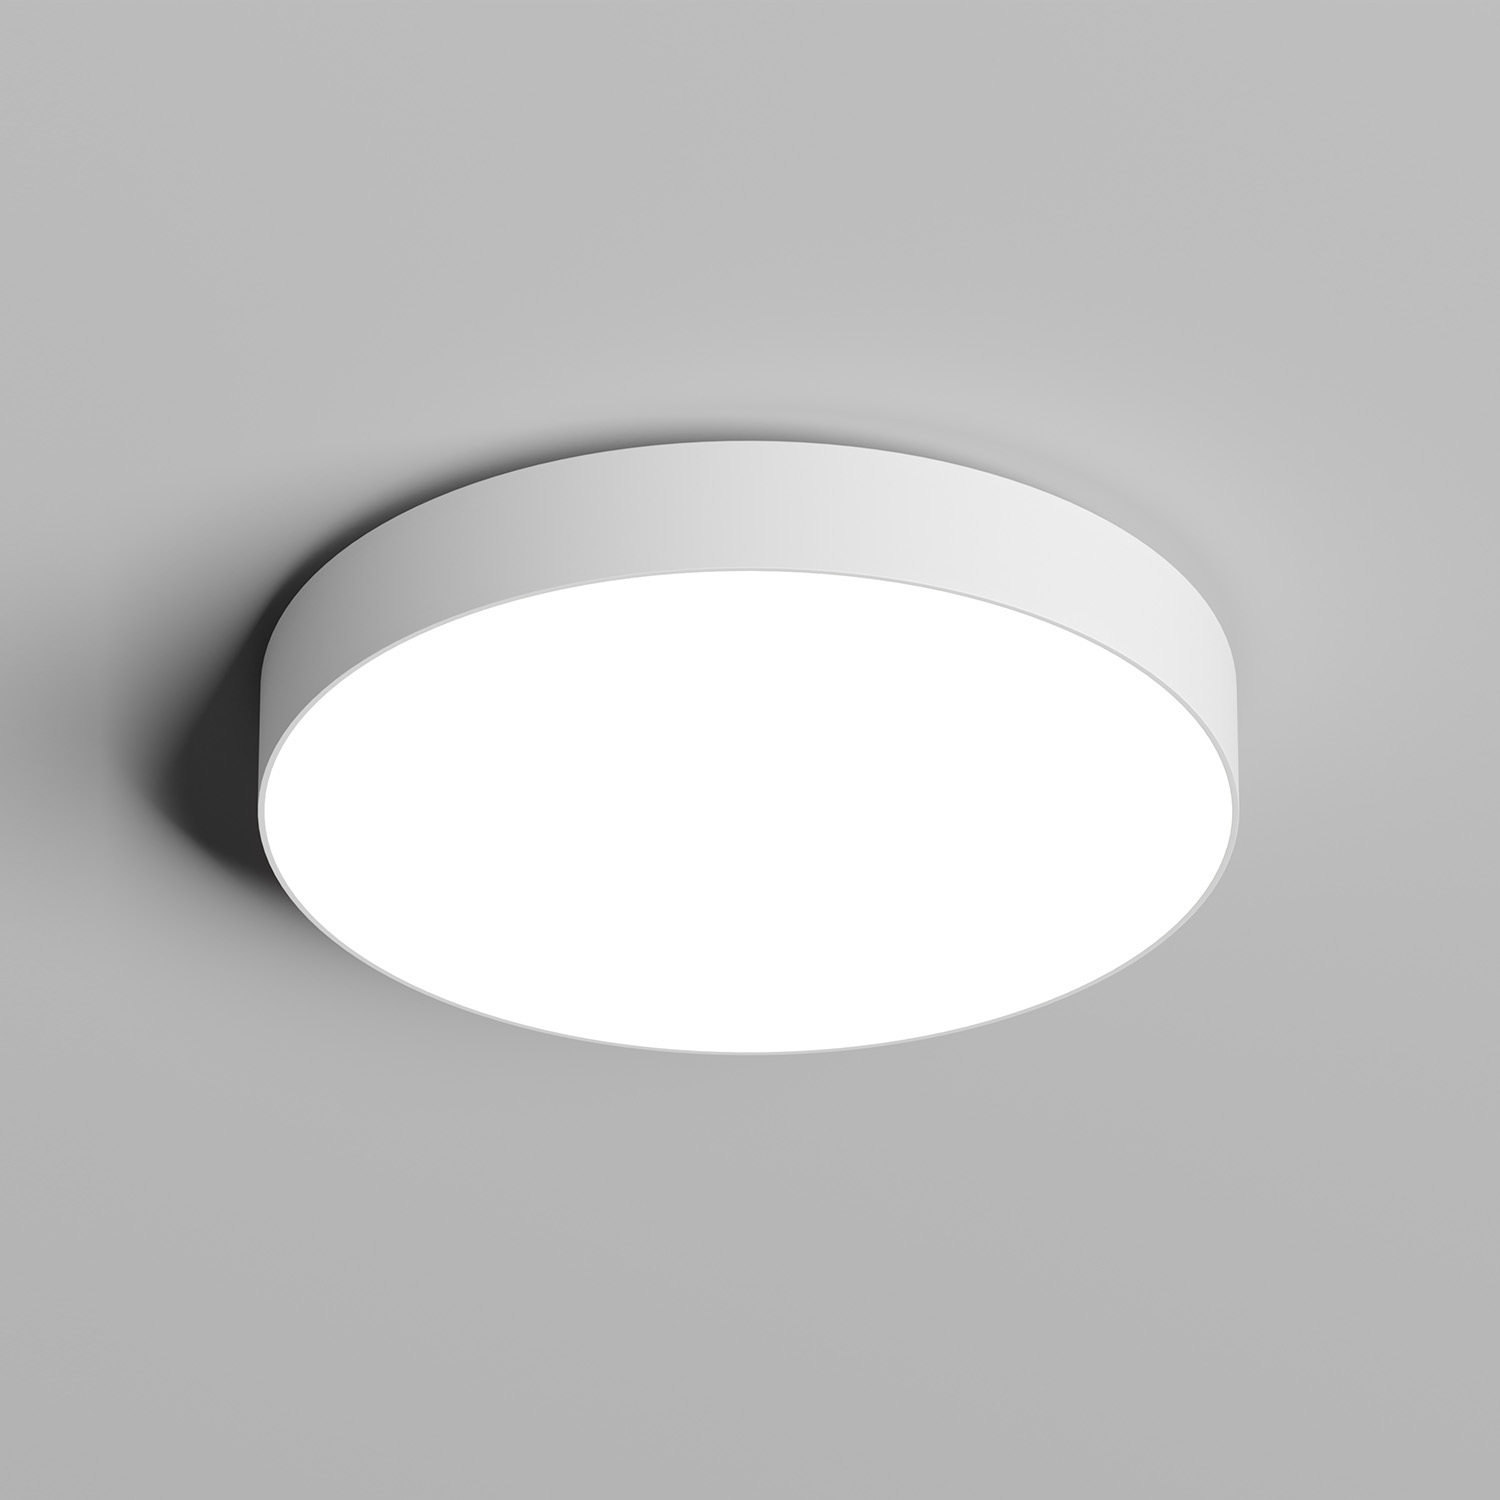 Накладной светильник TAB LED LED 3000K/4000K/6500K d212mm белый алюминий/акрил Denkirs DK2851-WH DK2851-WH